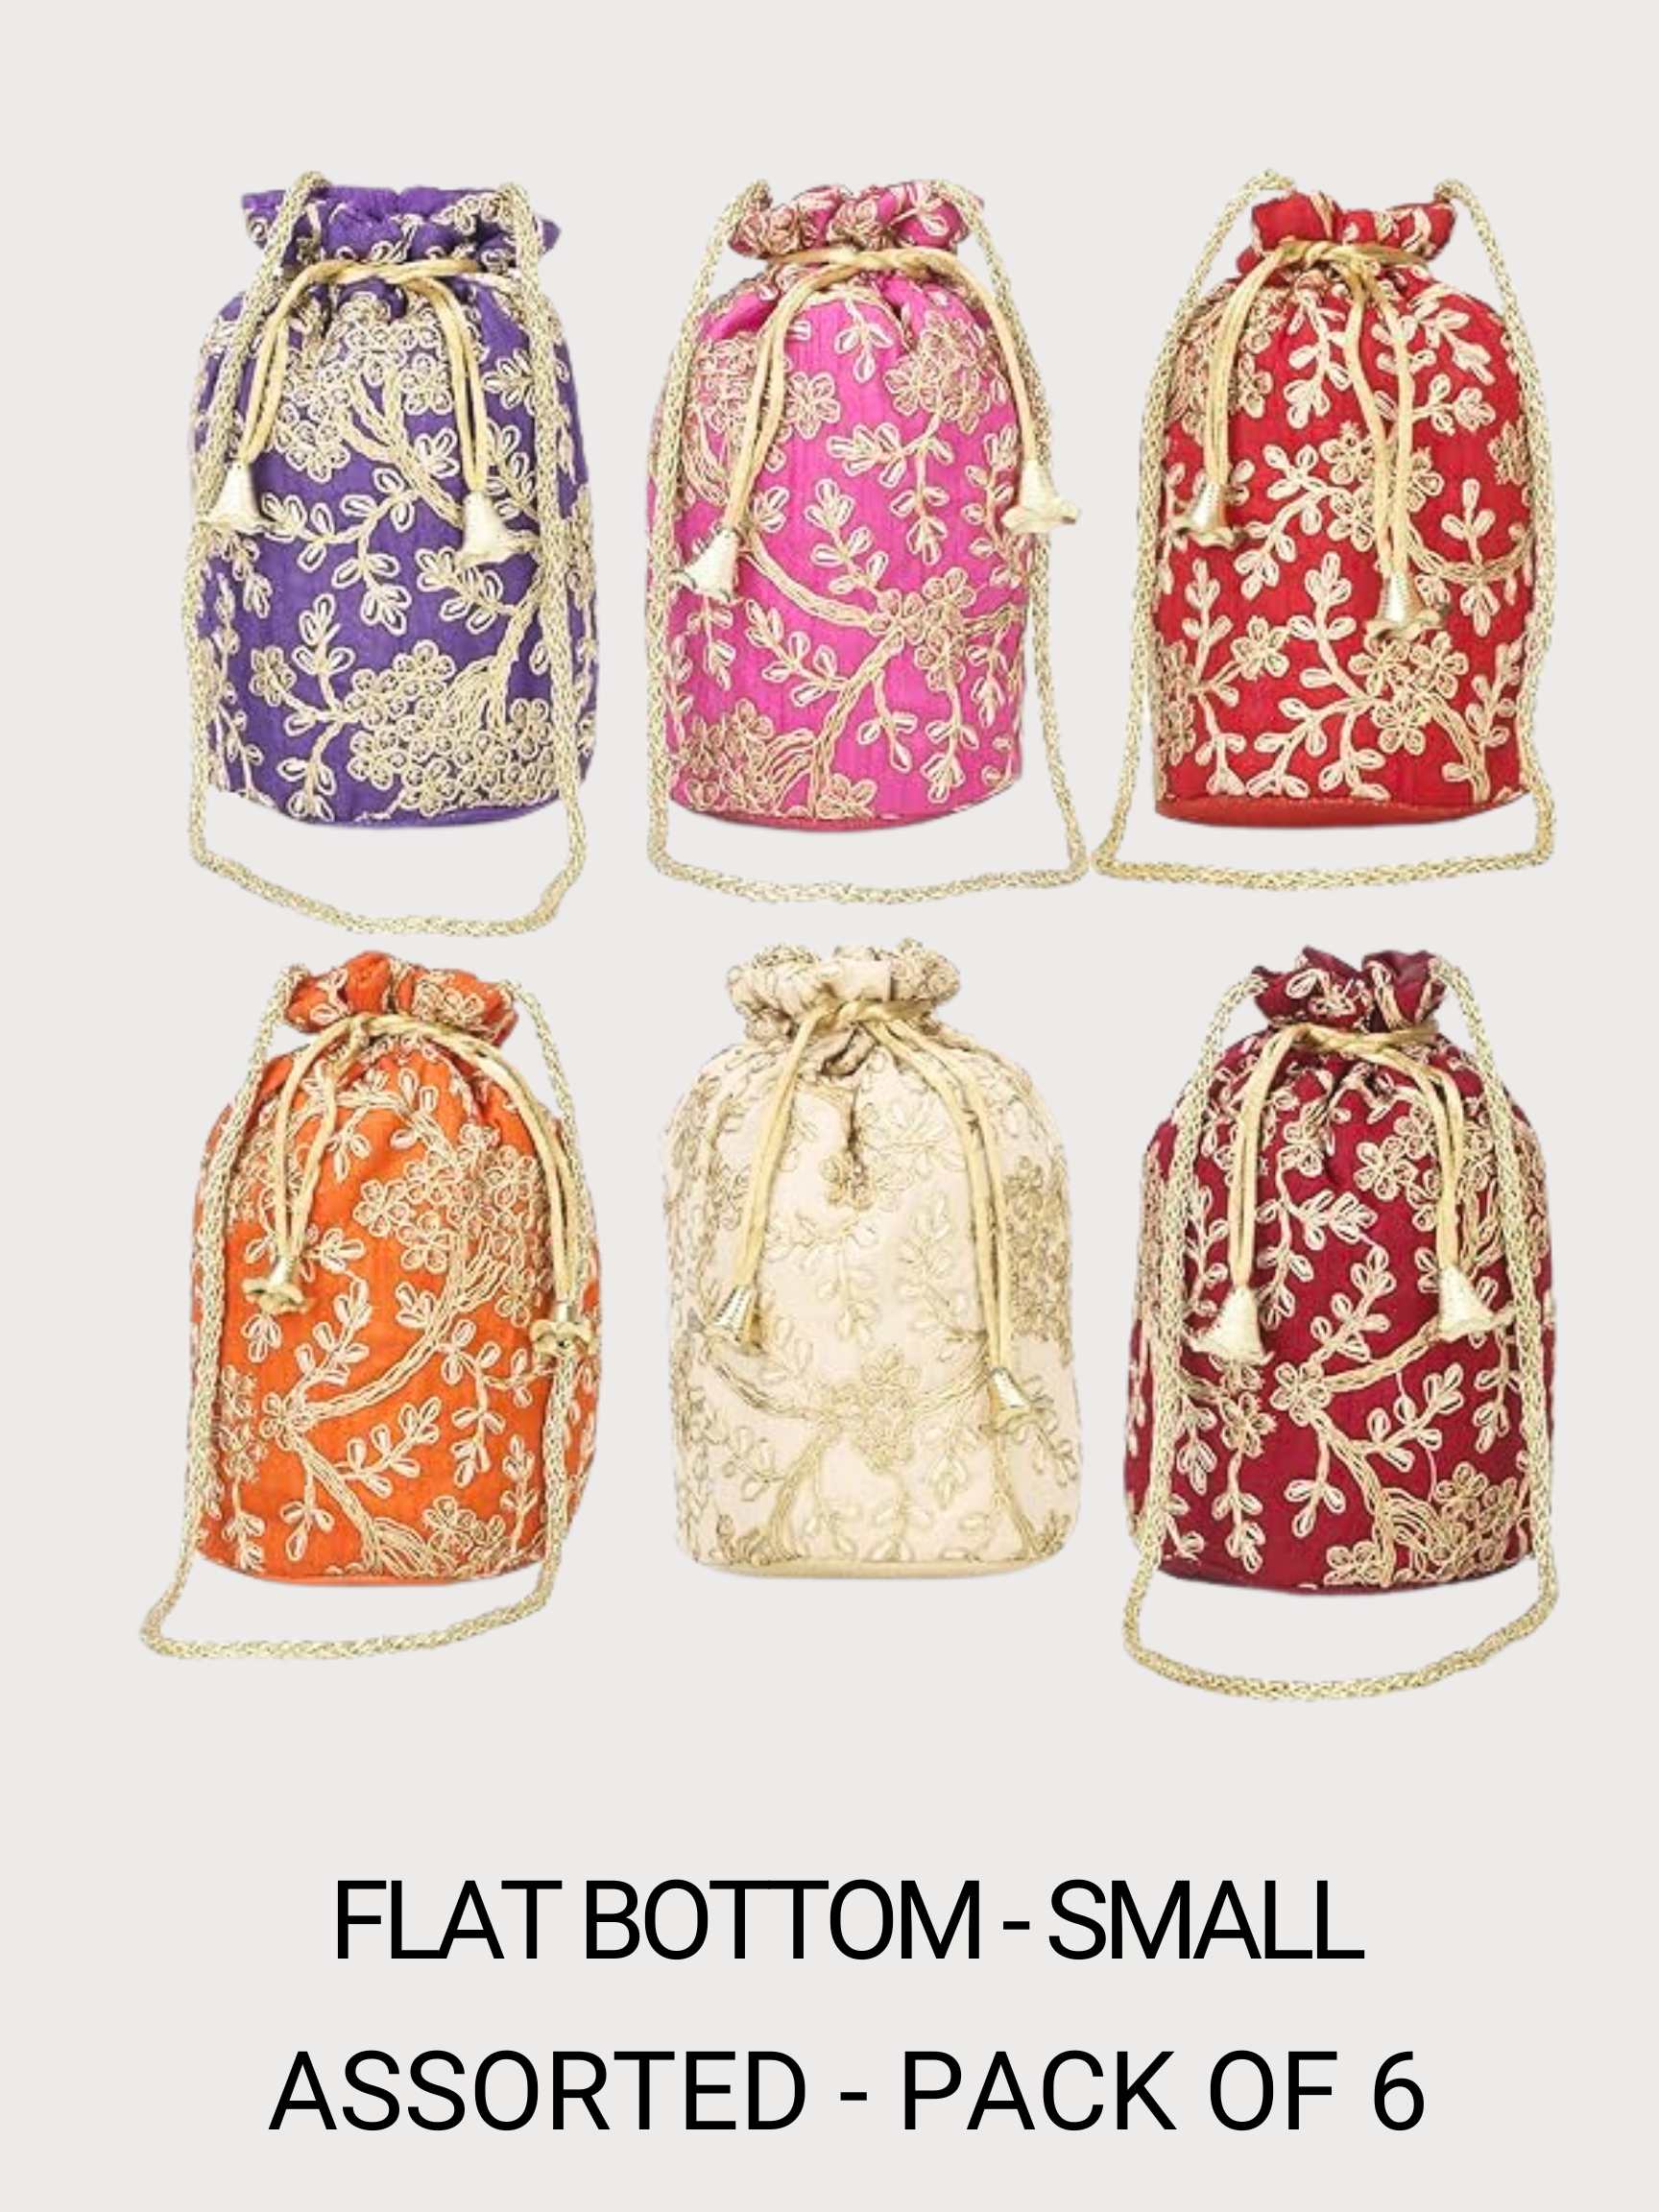 FASHQUE - Jewelry Designer Women Potli Bags, Evening Handbags for women - Flat Bottom Small - PT Bags